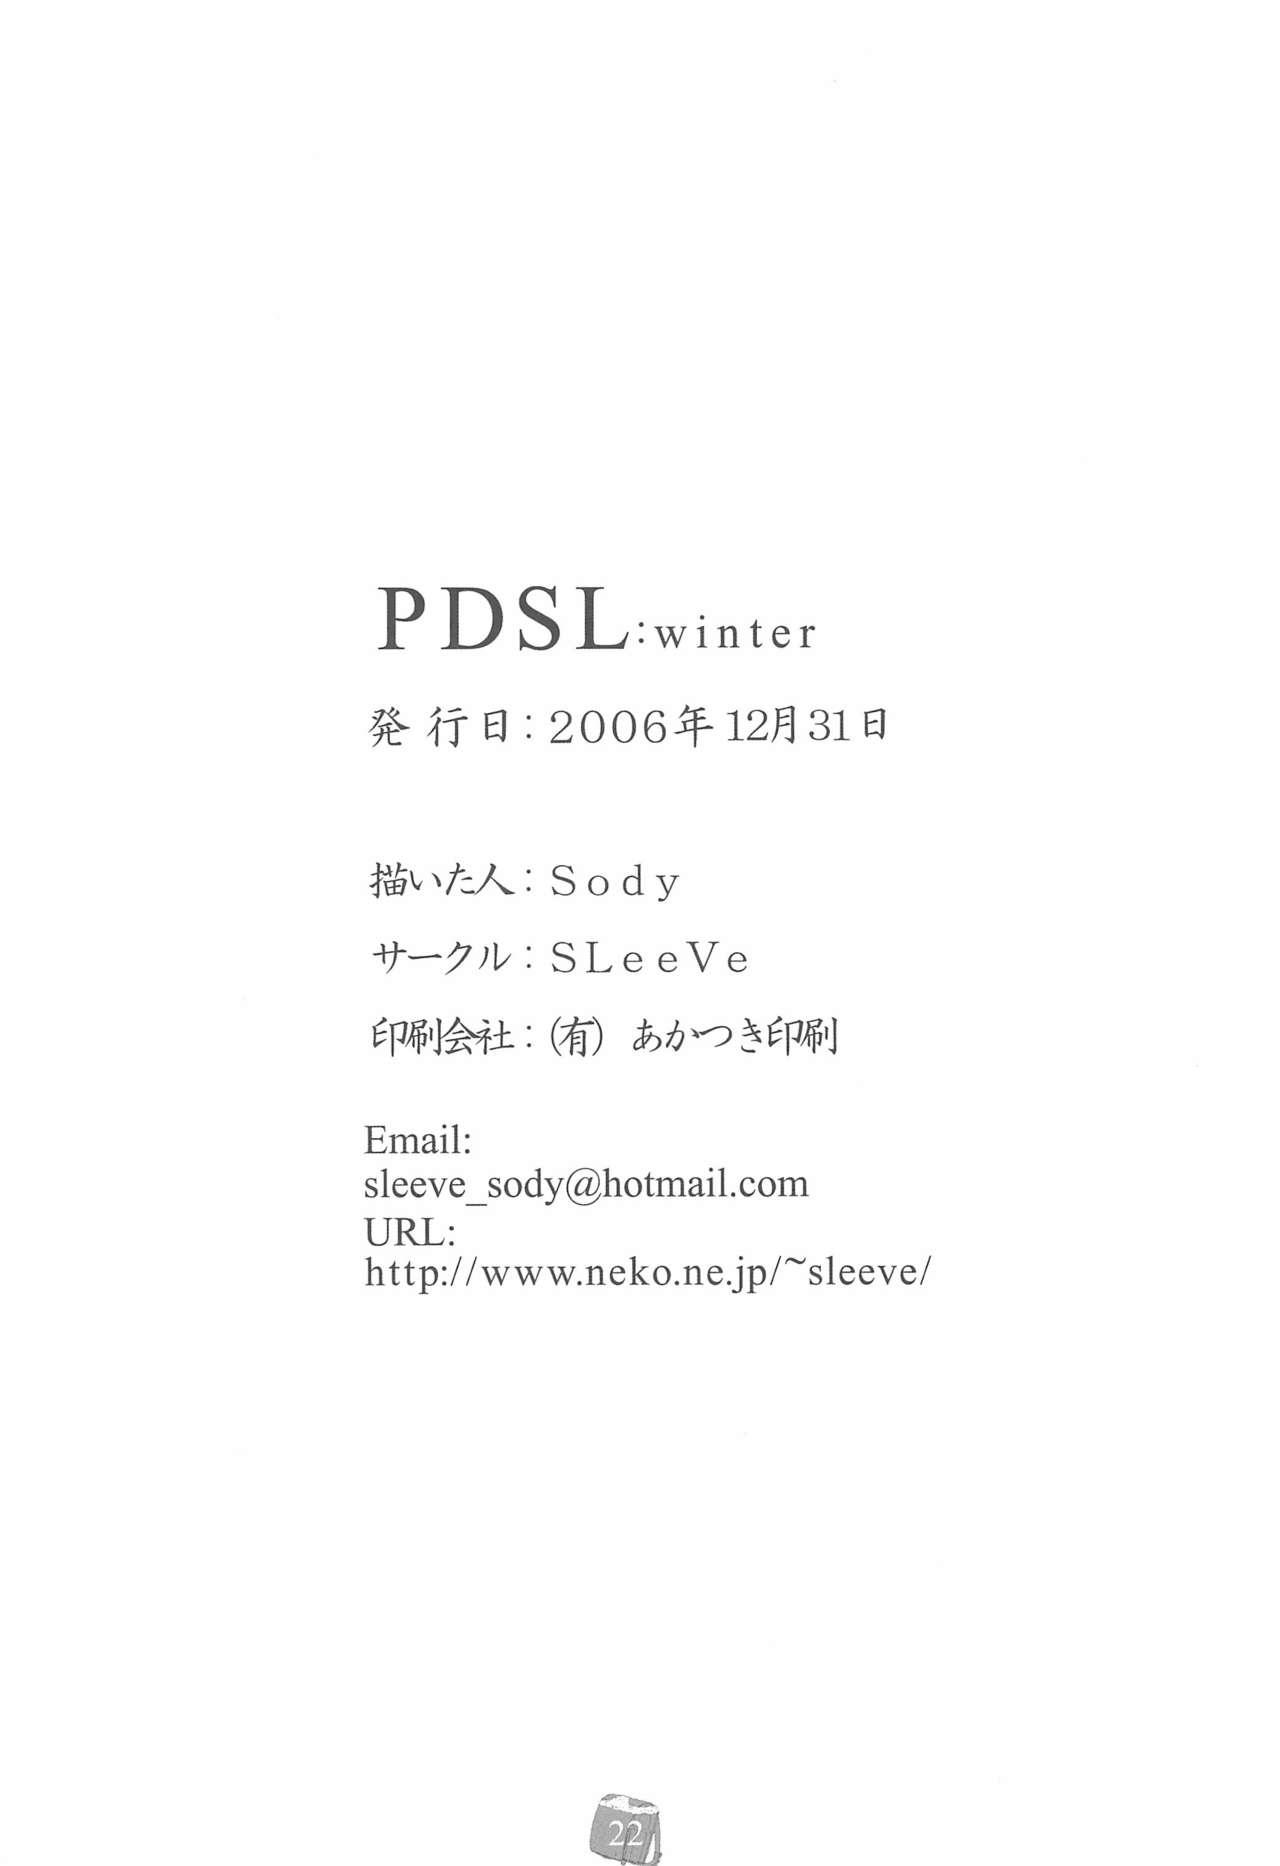 PDSL:winter 23